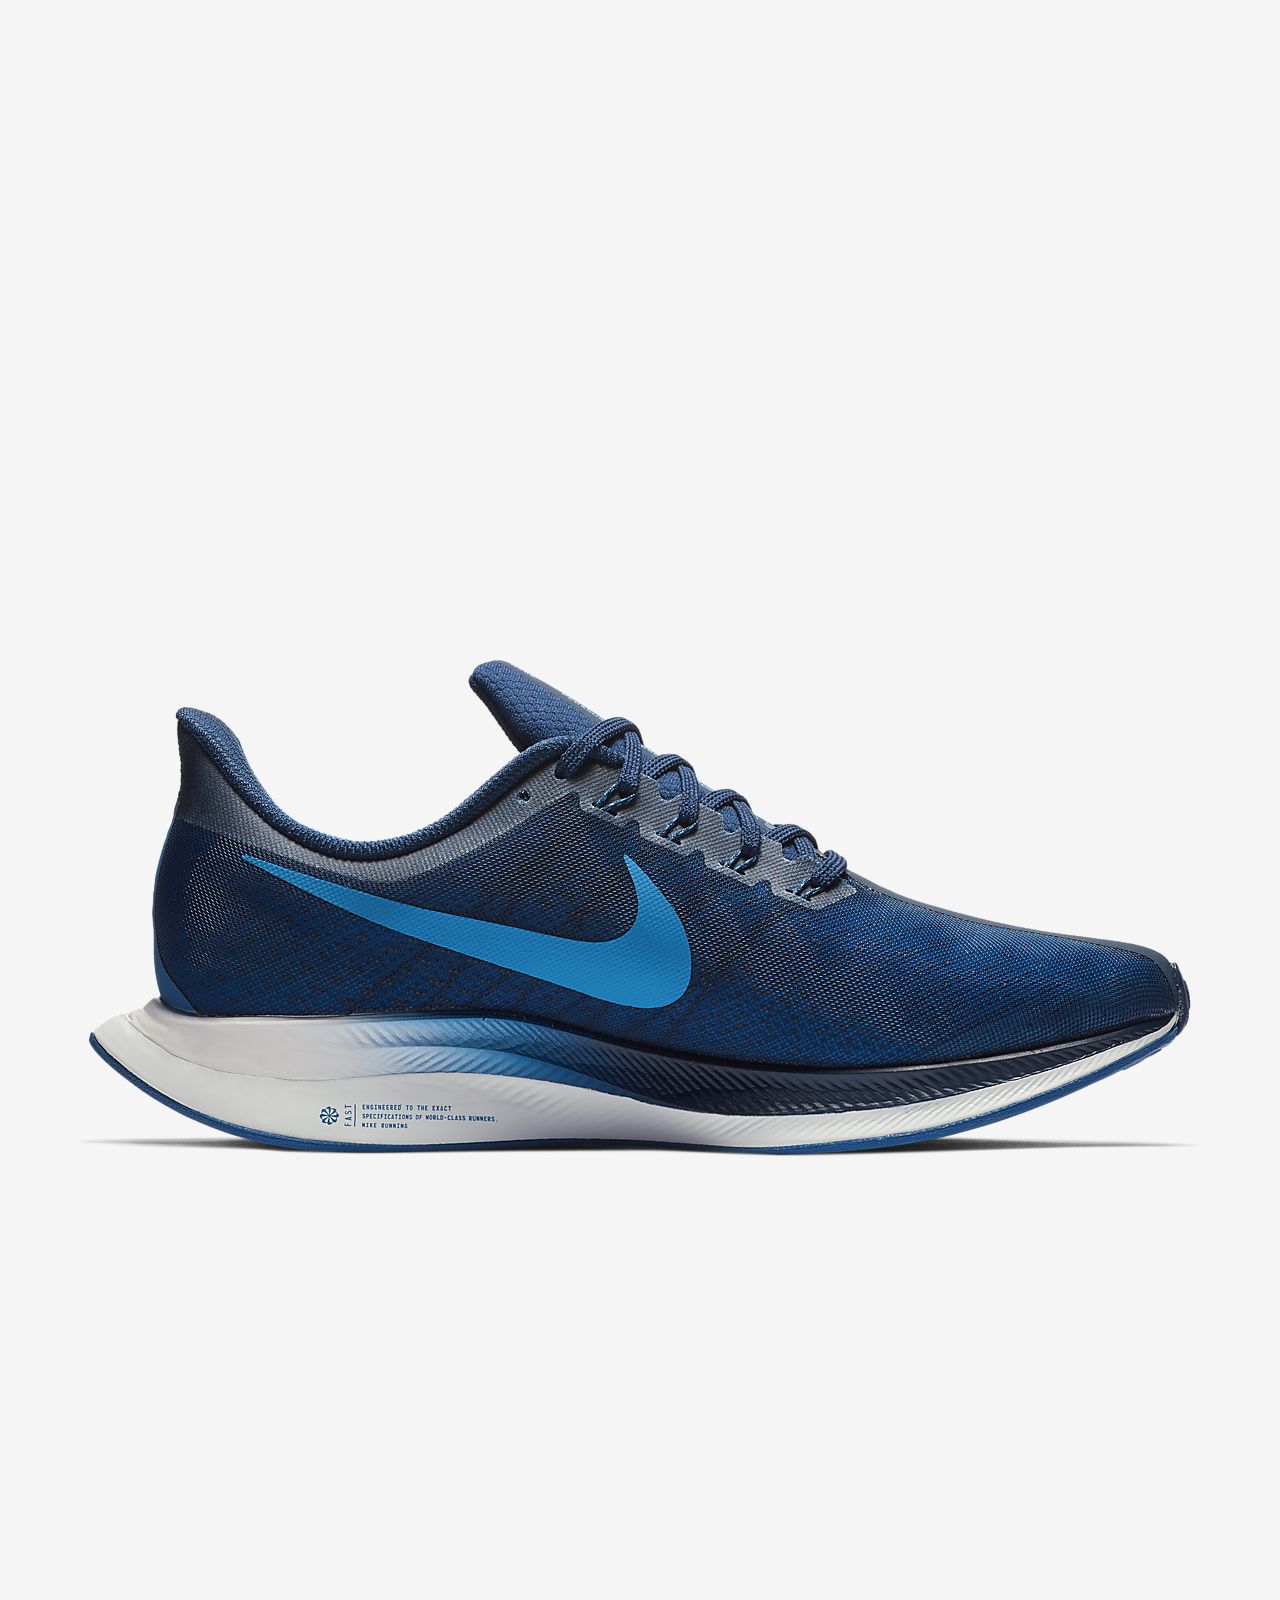 nike 2019 zoomx pegasus 35 turbo blue running shoes